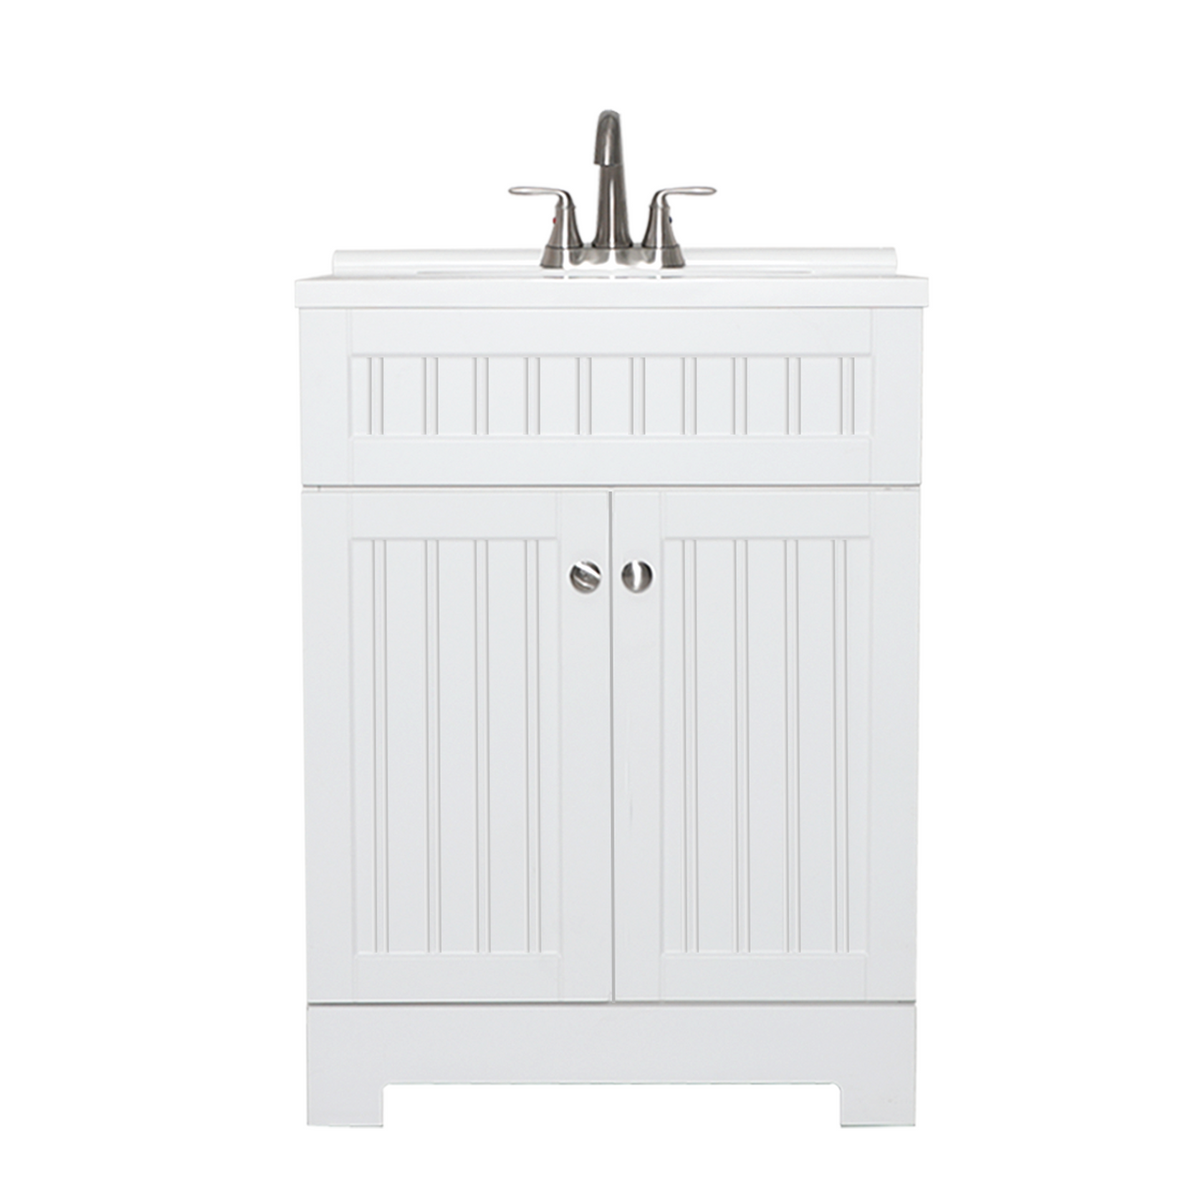 Eclife 24" -30" White Bathroom Vanity Cabinet Sink Combo W/Waterproof Resin Basin Countertop & Stainless Steel Faucet & Pop Up Drain